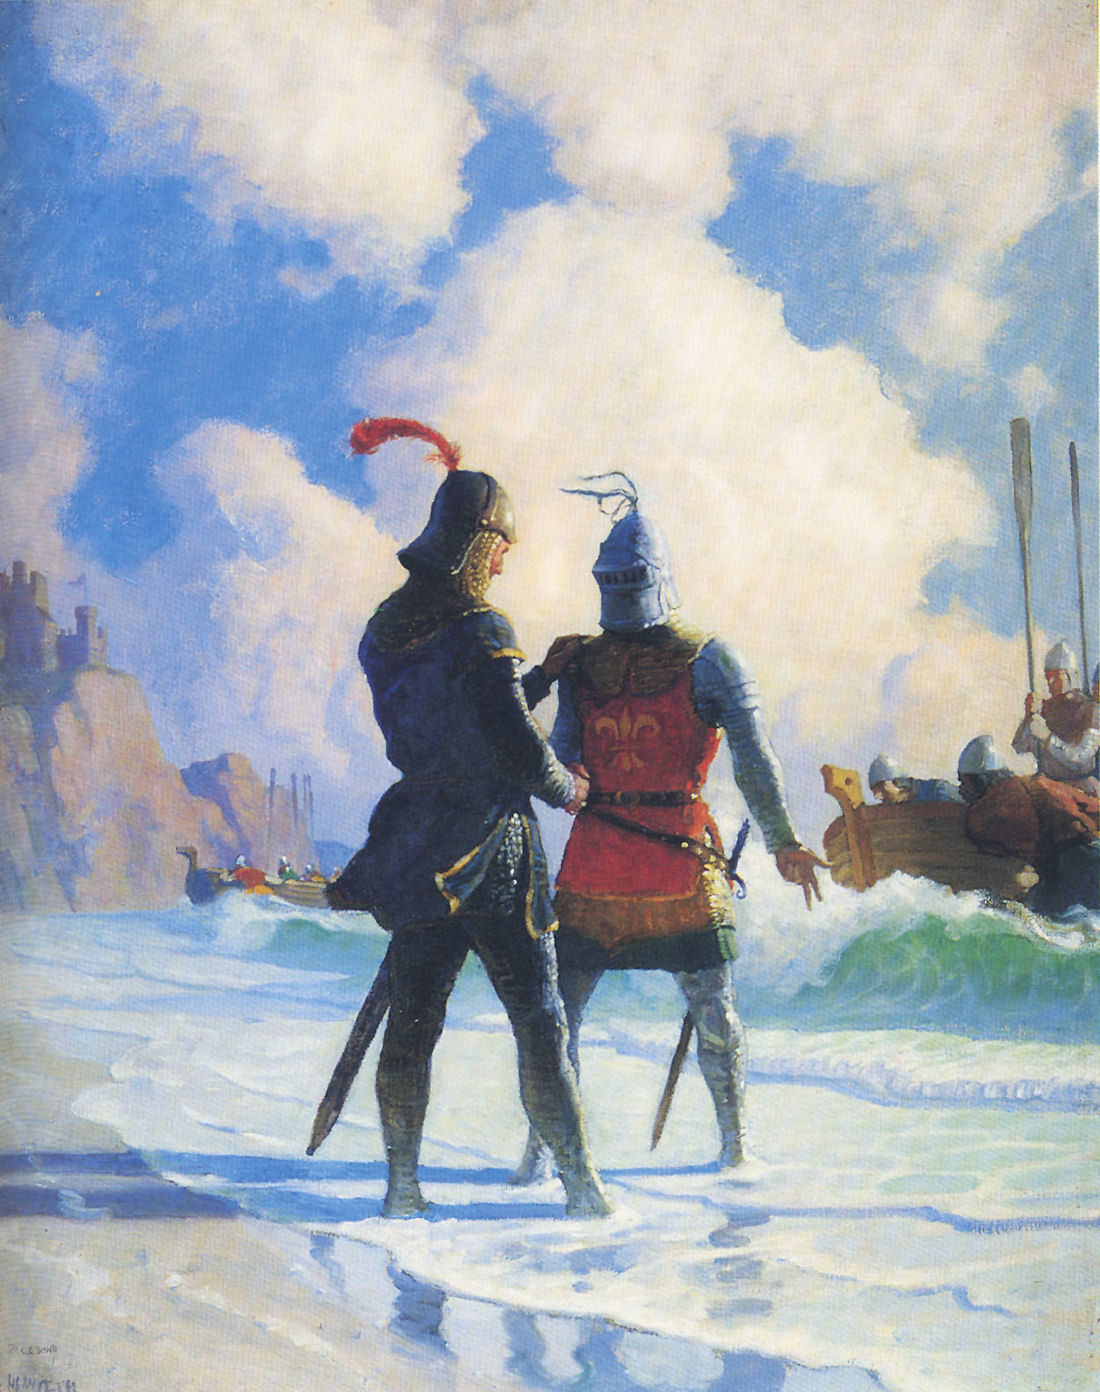 Illustration from "Scottish Chiefs" by N.C. Wyeth